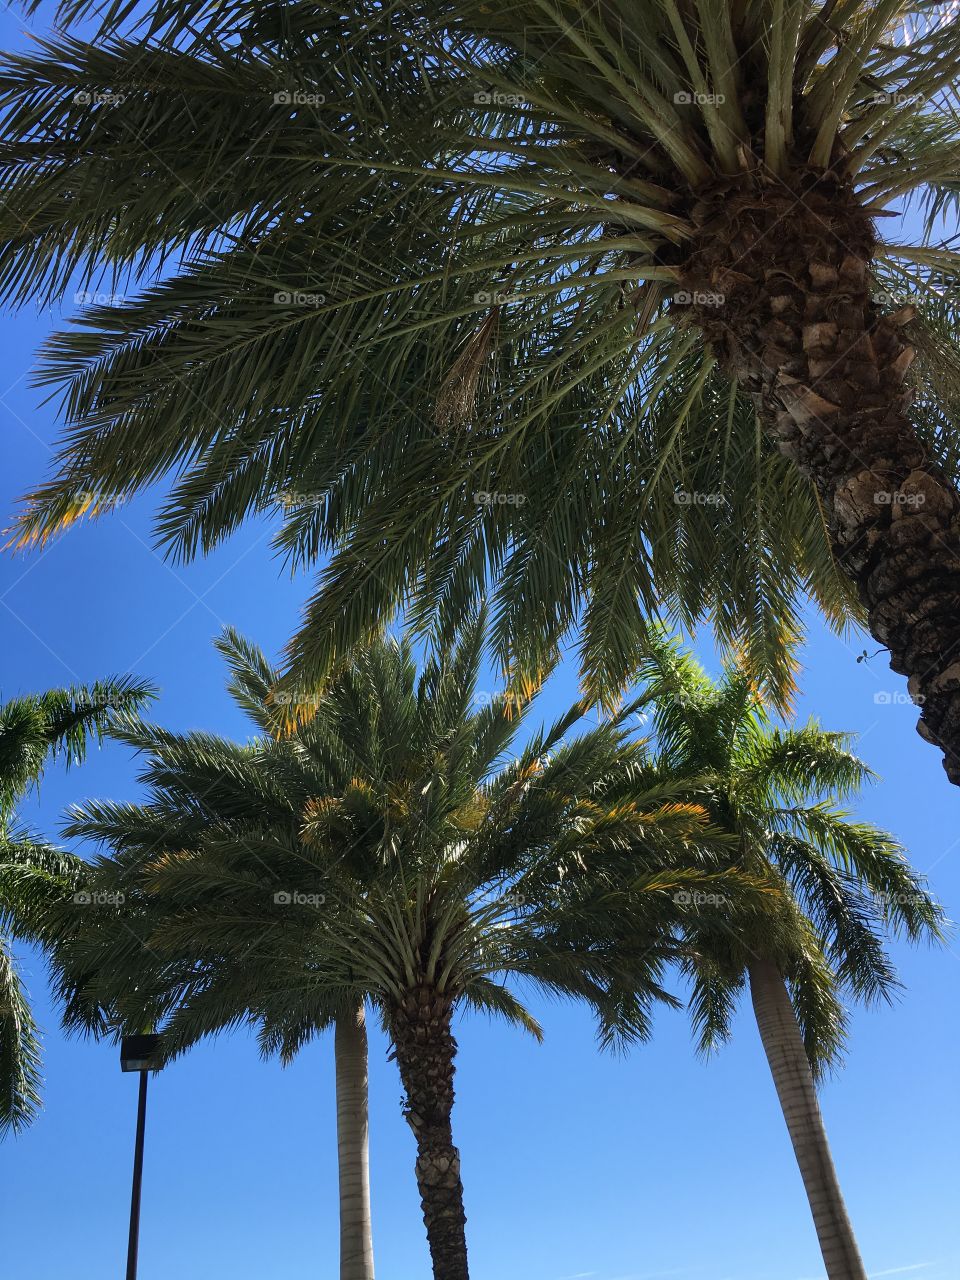 Palm Paradise!